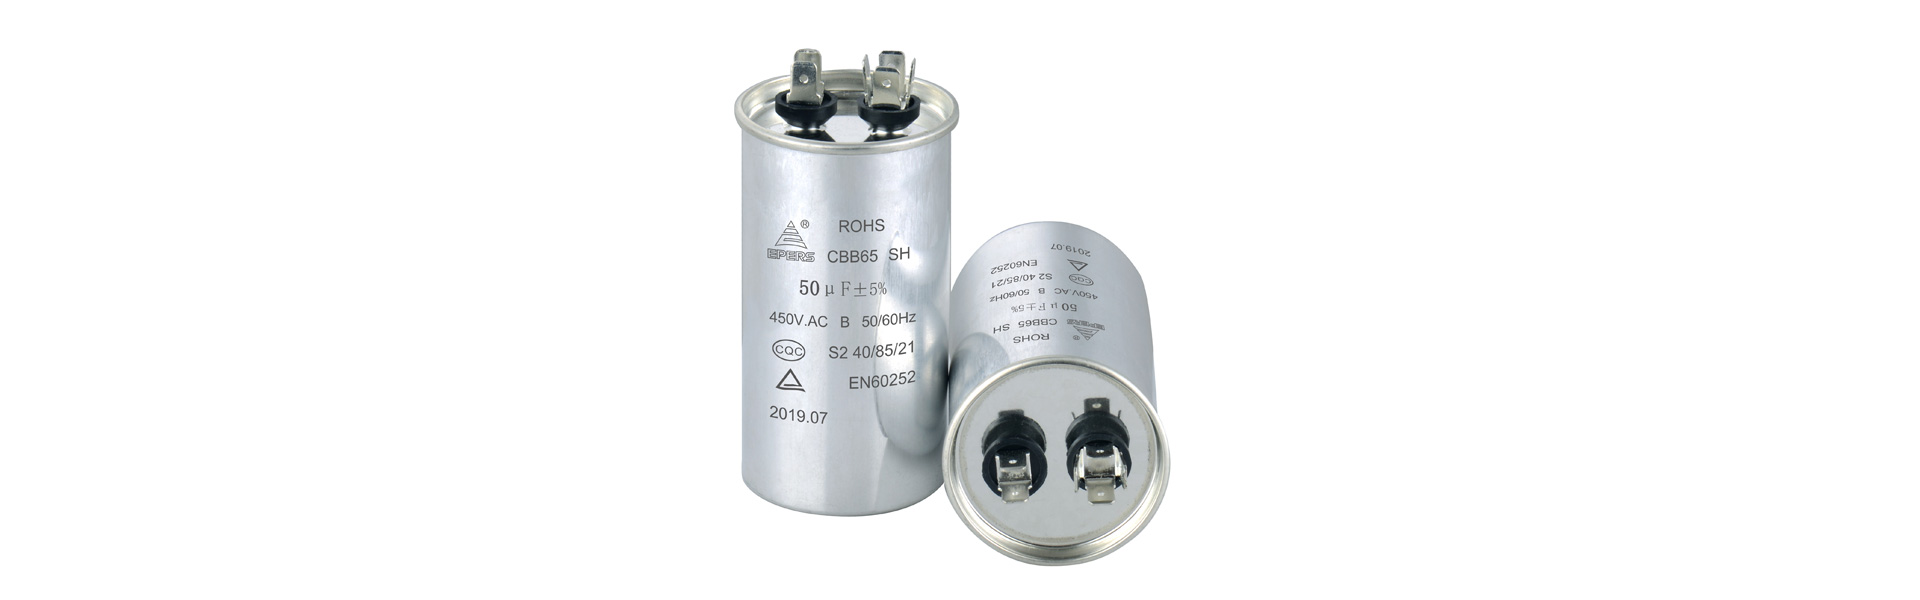 condensatore, film metallizzato, cbb61,Zhongshan Epers Electrical Appliances Co.,Ltd.